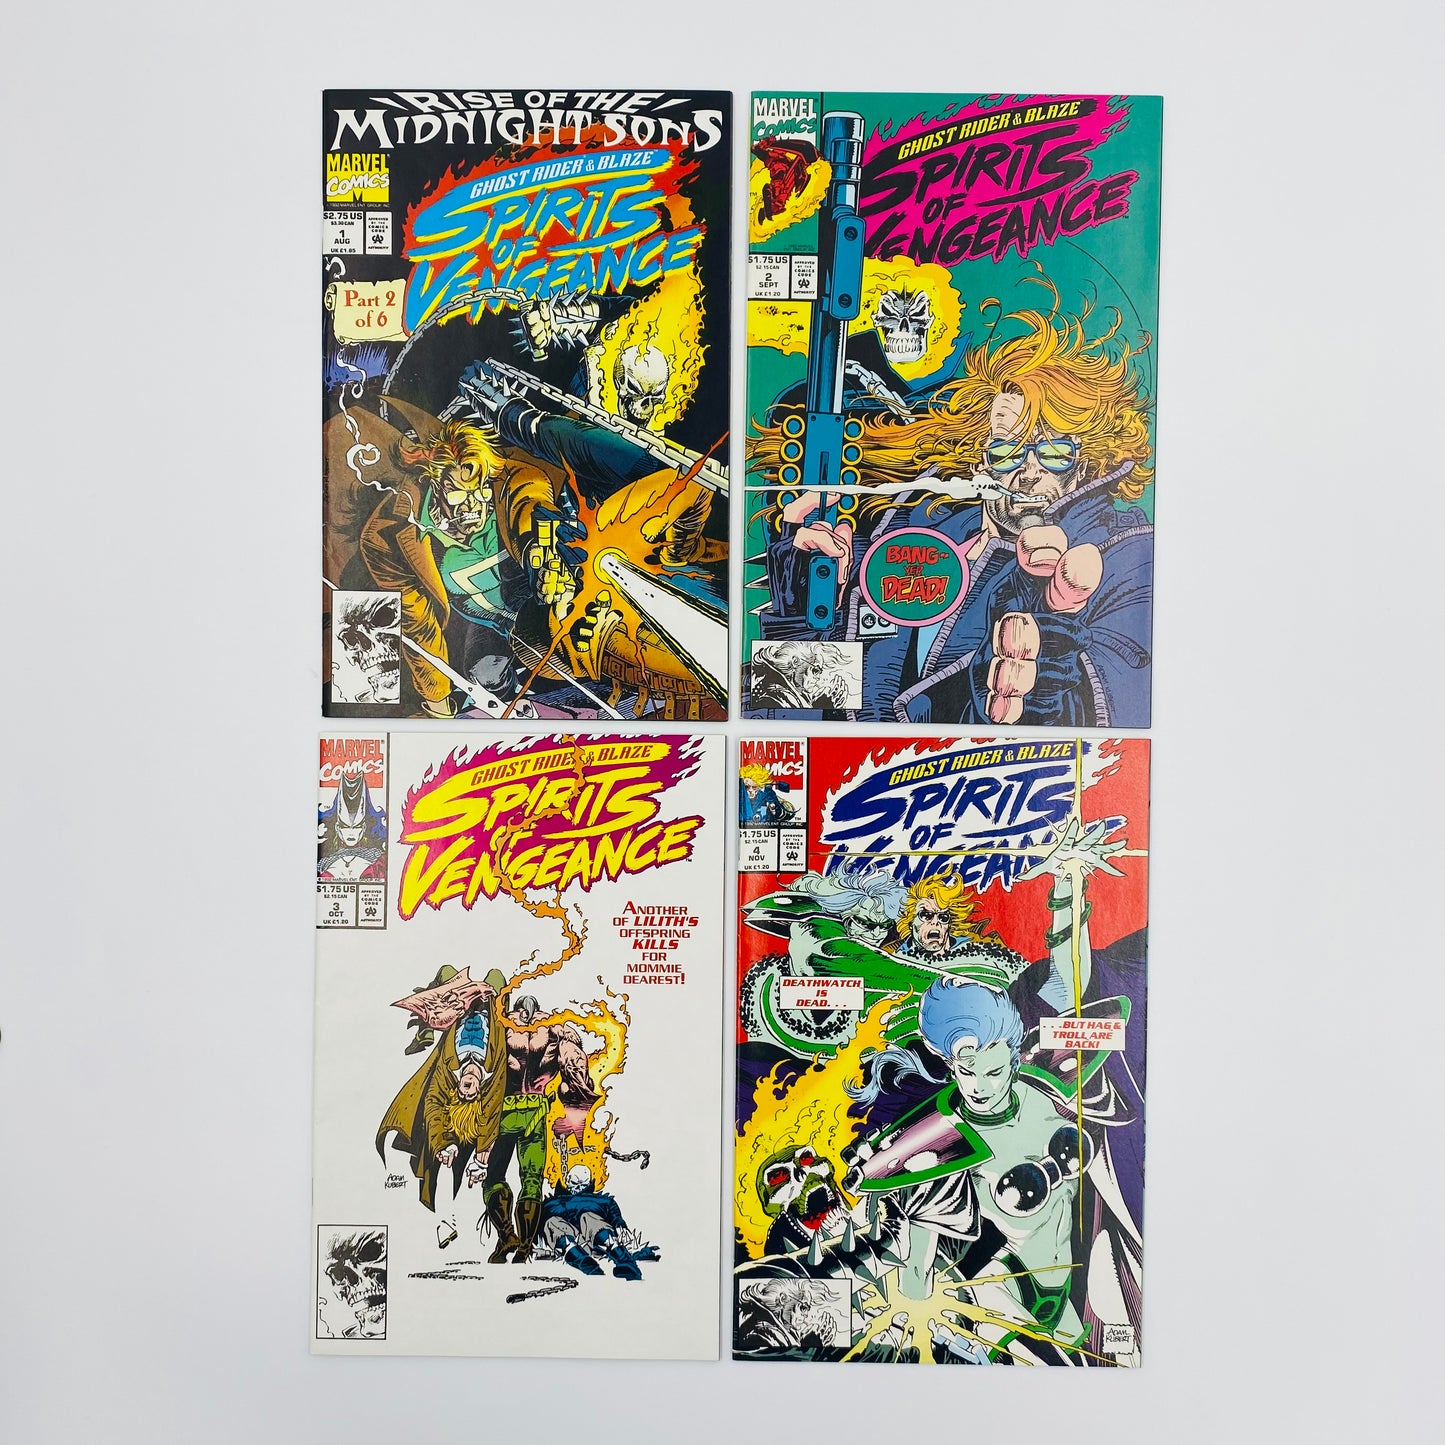 Ghost Rider & Blaze Spirits of Vengeance #1-23 (1992-1994) Web of Spider-Man #95 & 96 (1992-1993) Gun Runner #1 (1993) Marvel